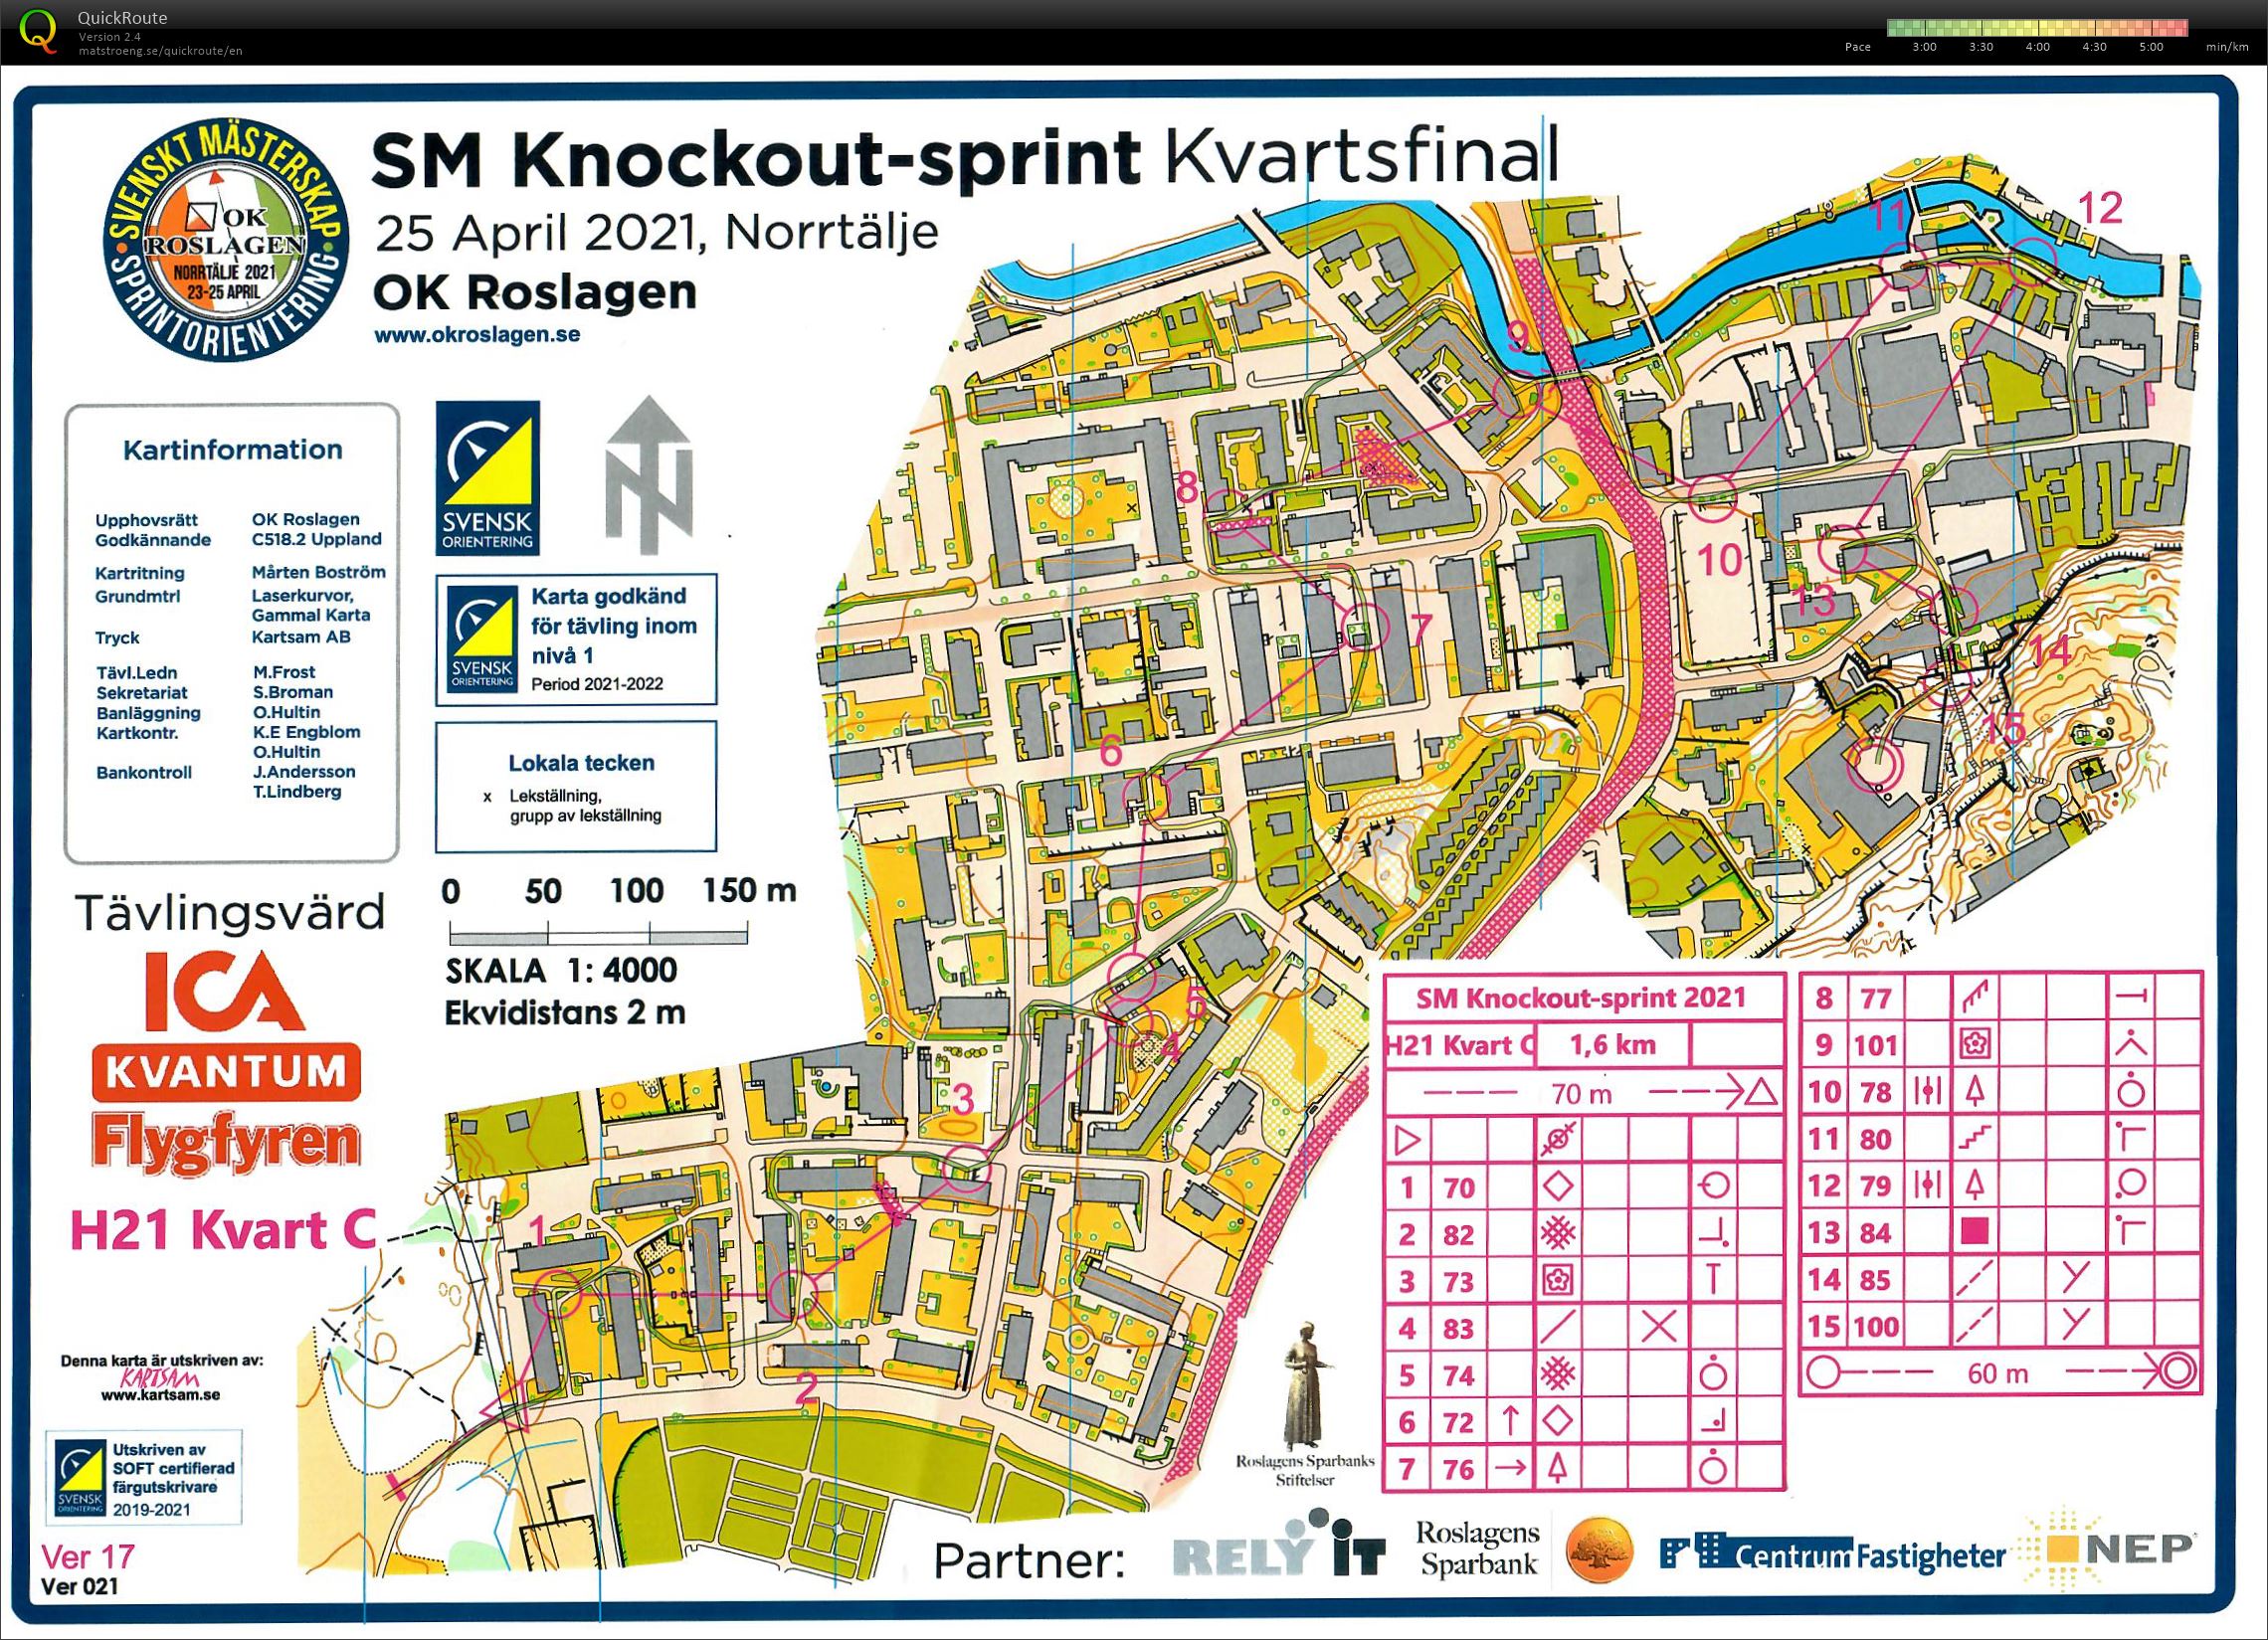 SM Knockout-sprint Kvartsfinal (25/04/2021)